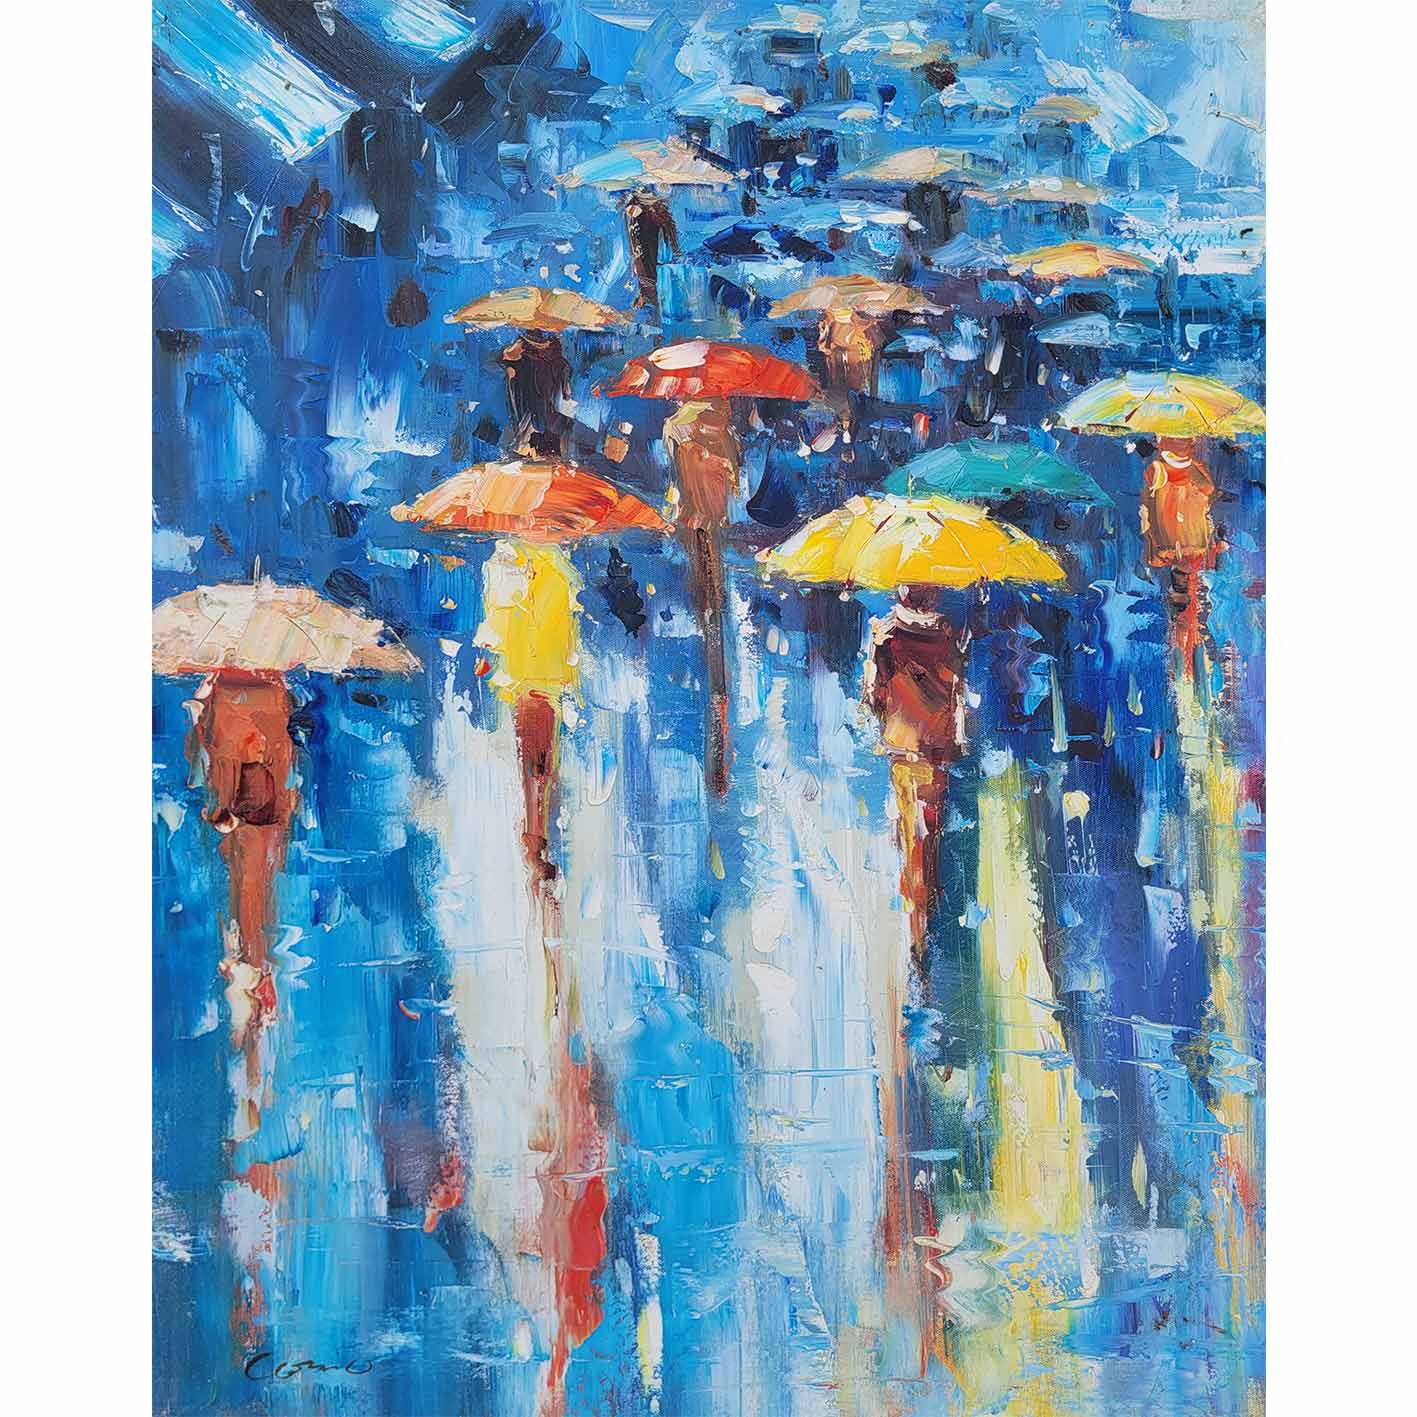 Painting The Street in Umbrellas